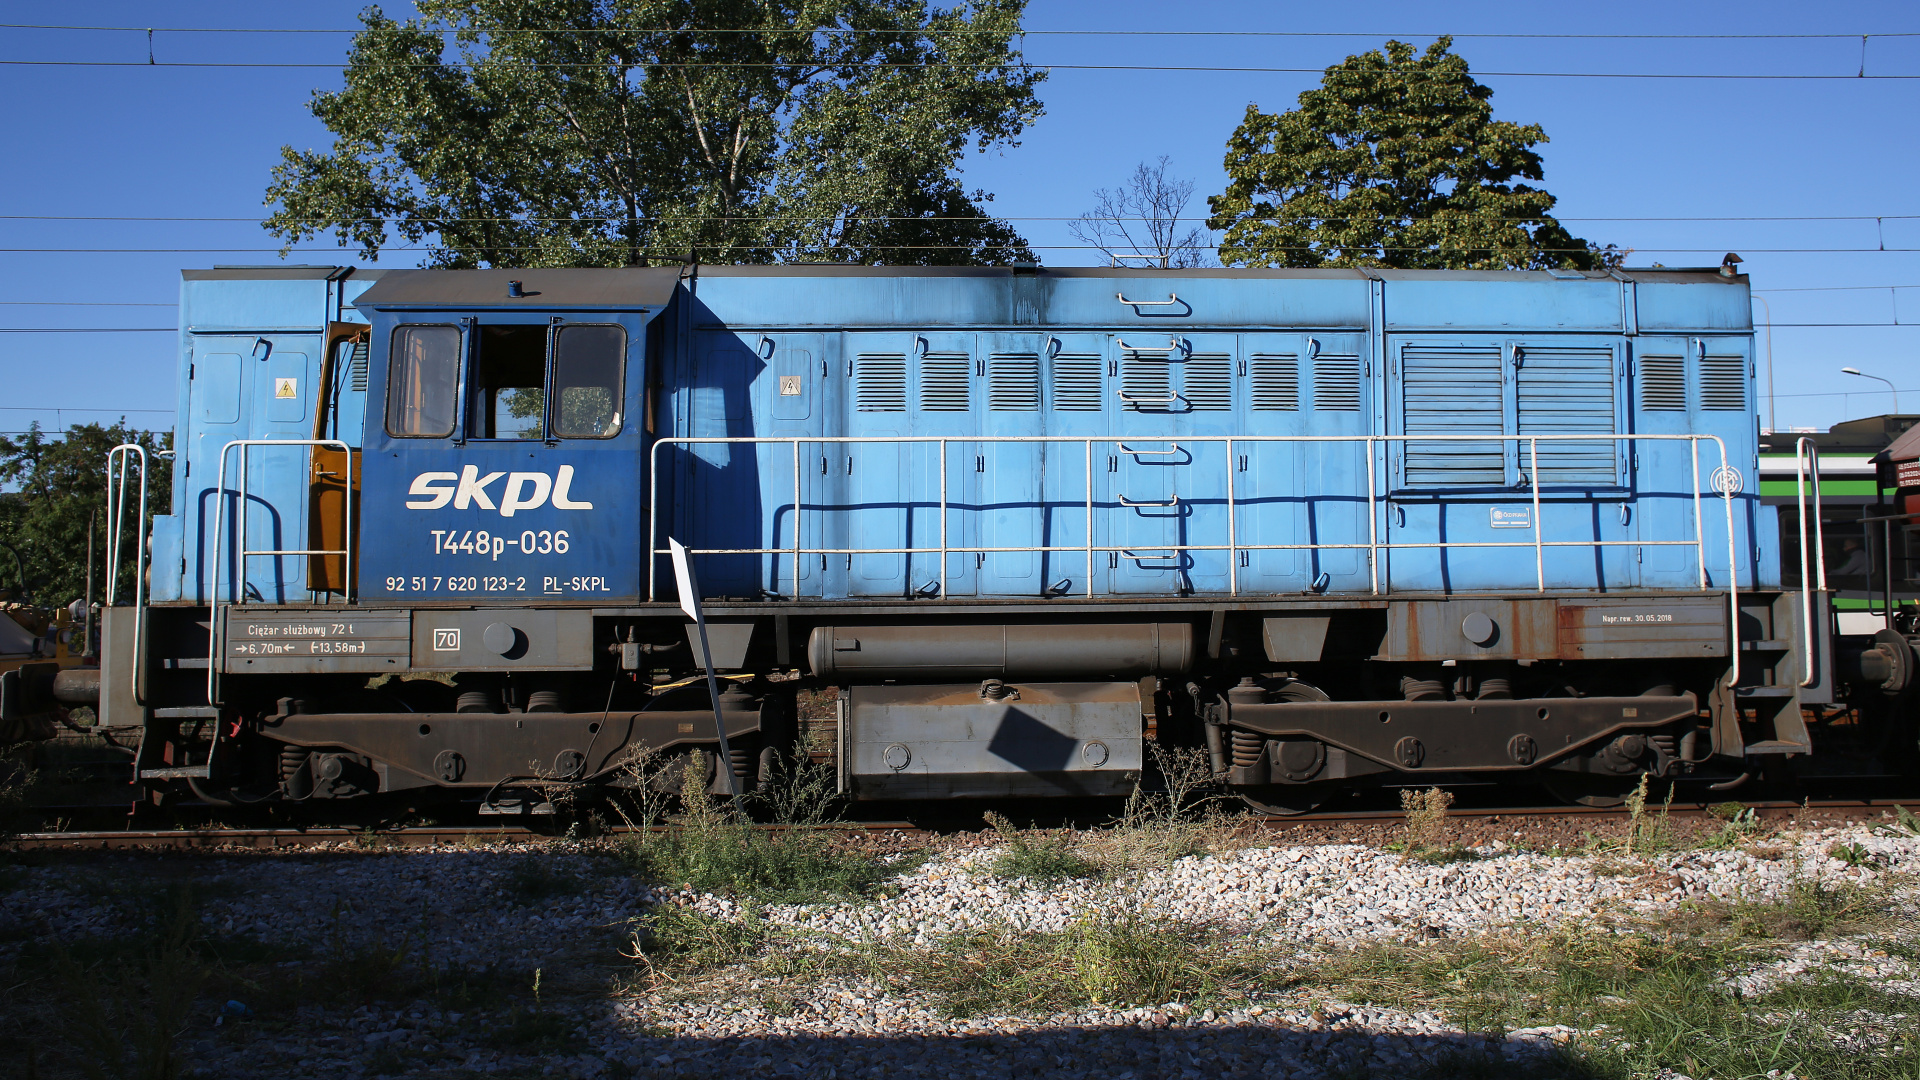 ČKD T448p-036 (Vehicles » Trains and Locomotives)